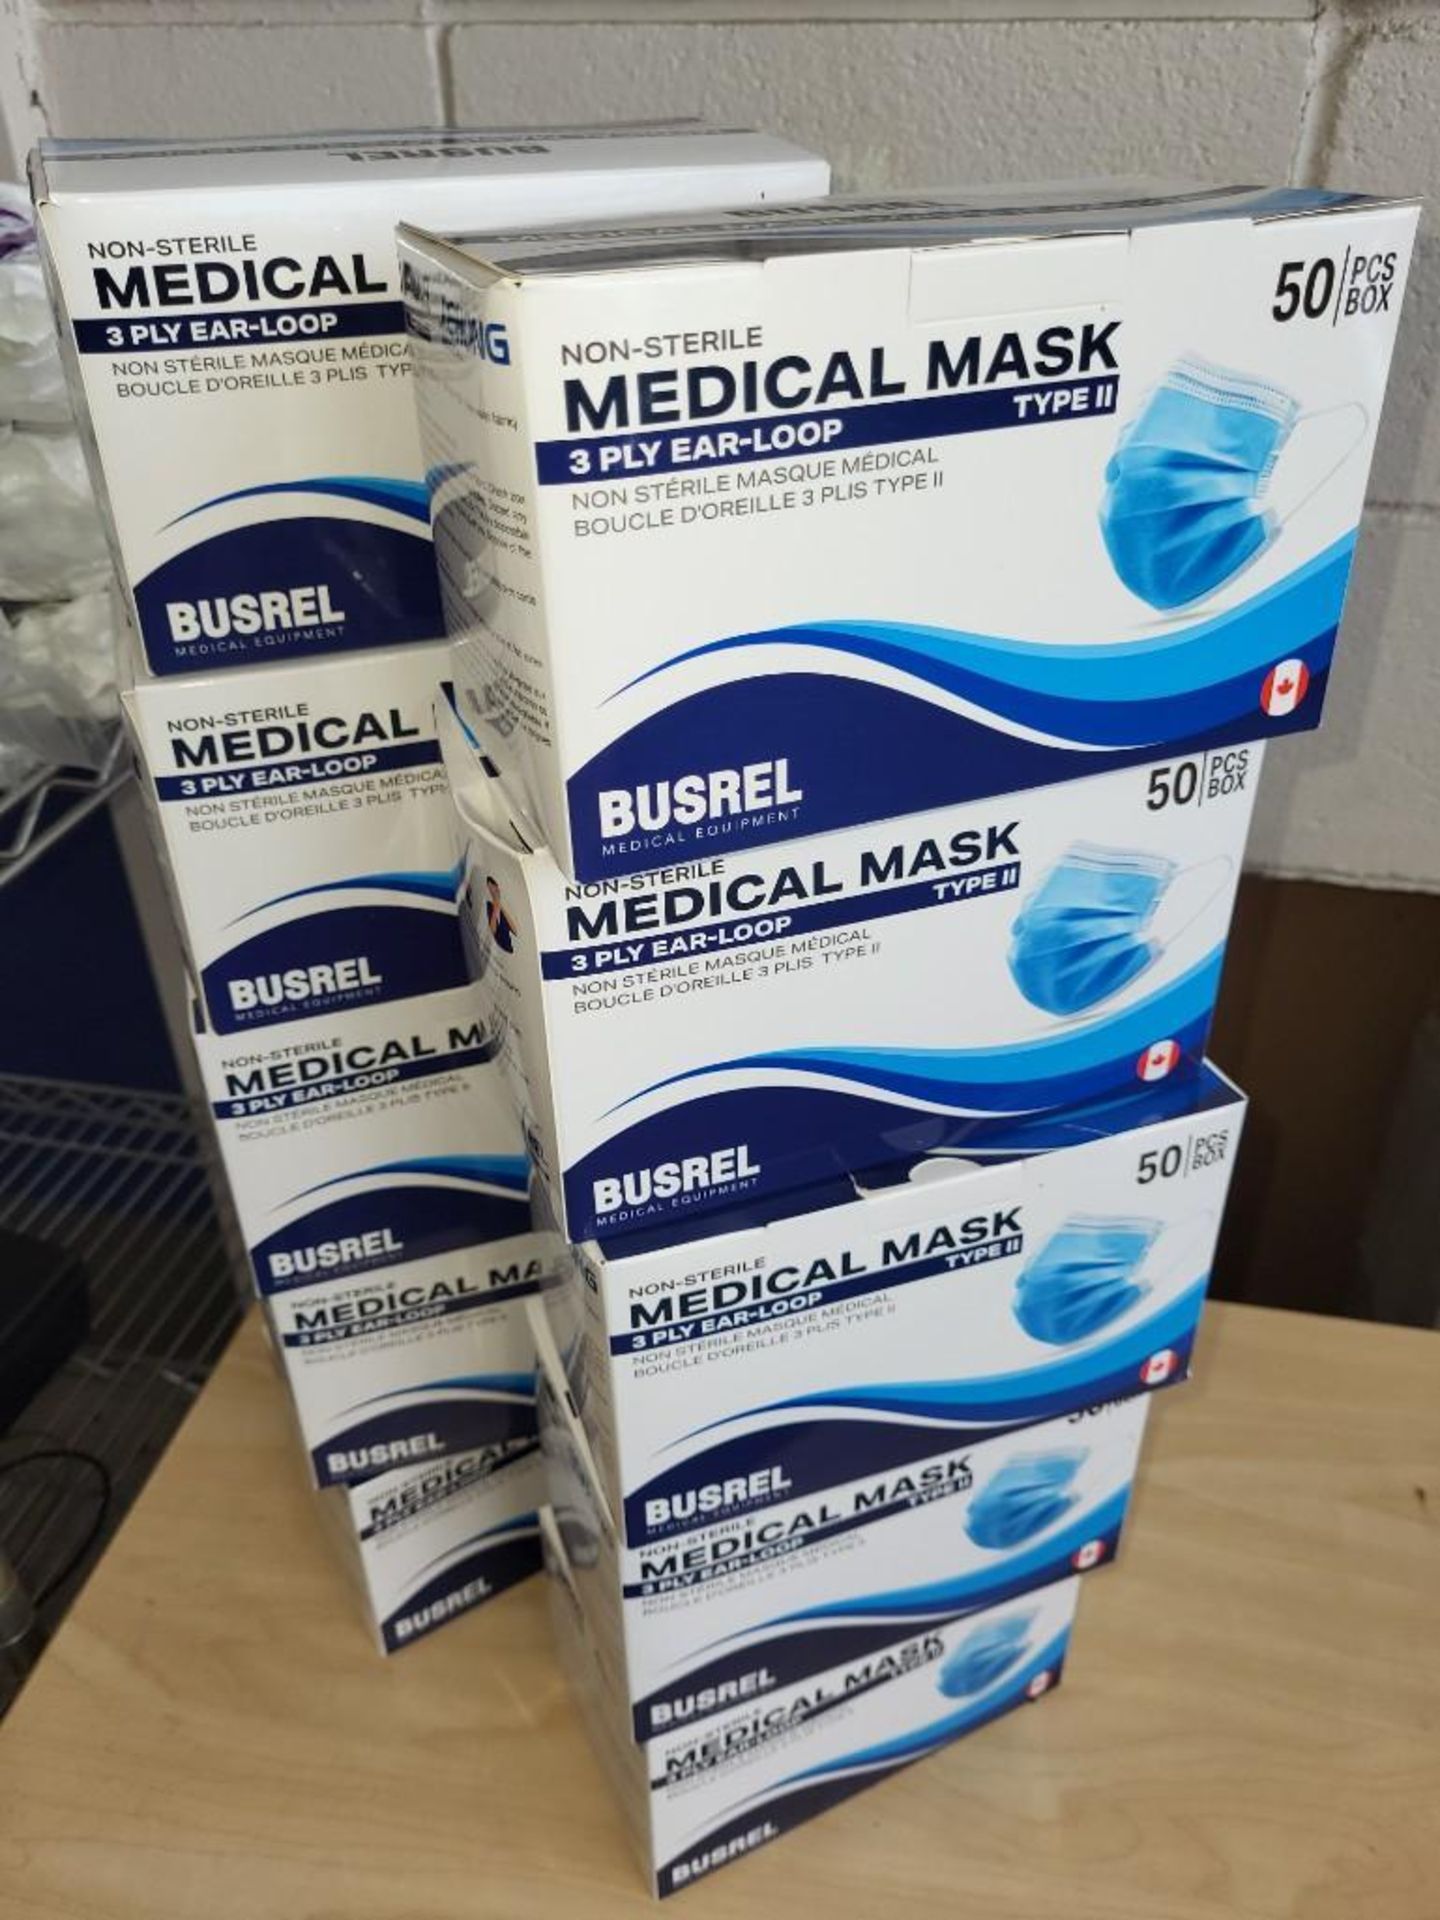 Boxes of 50 Medical Masks - Image 2 of 2